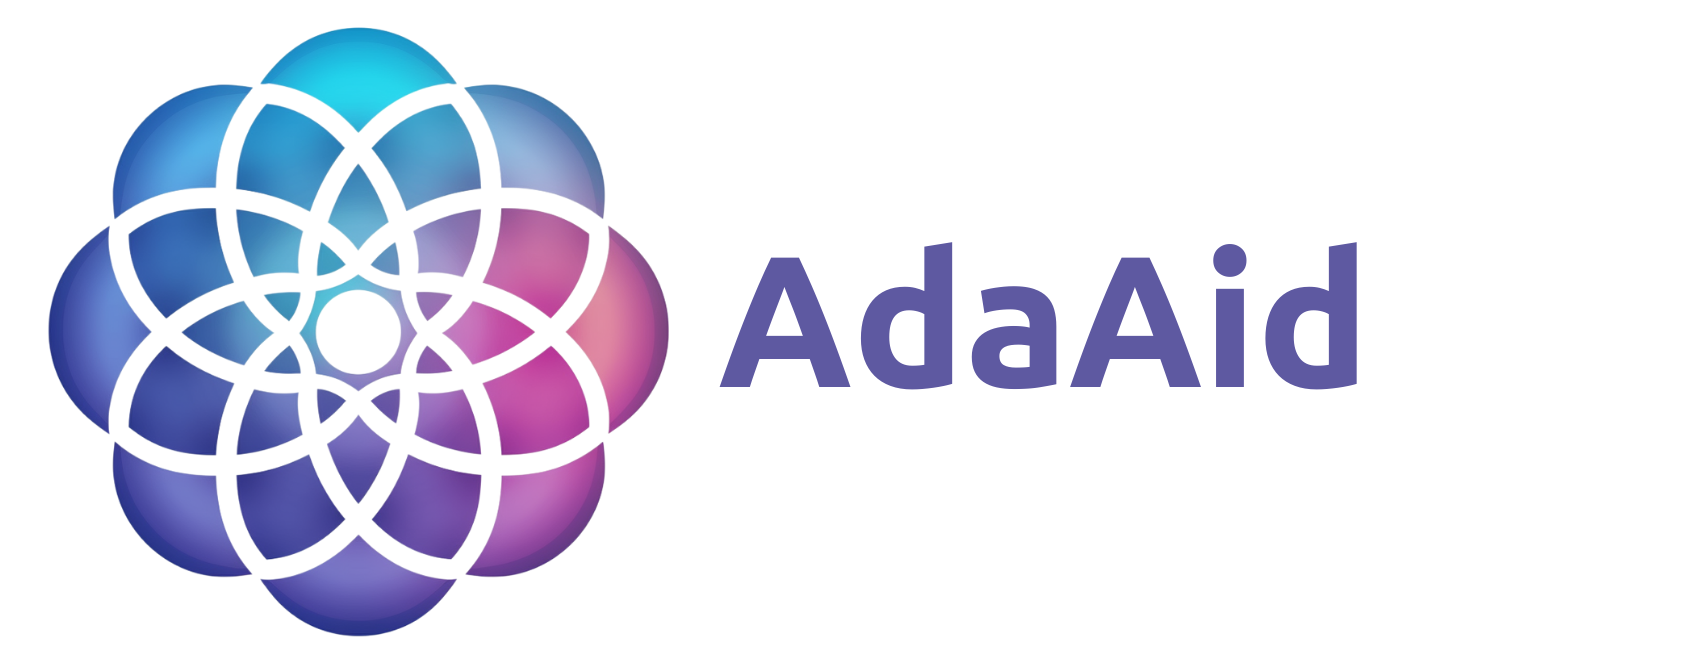 AdaAid-Logo-98da4c.png